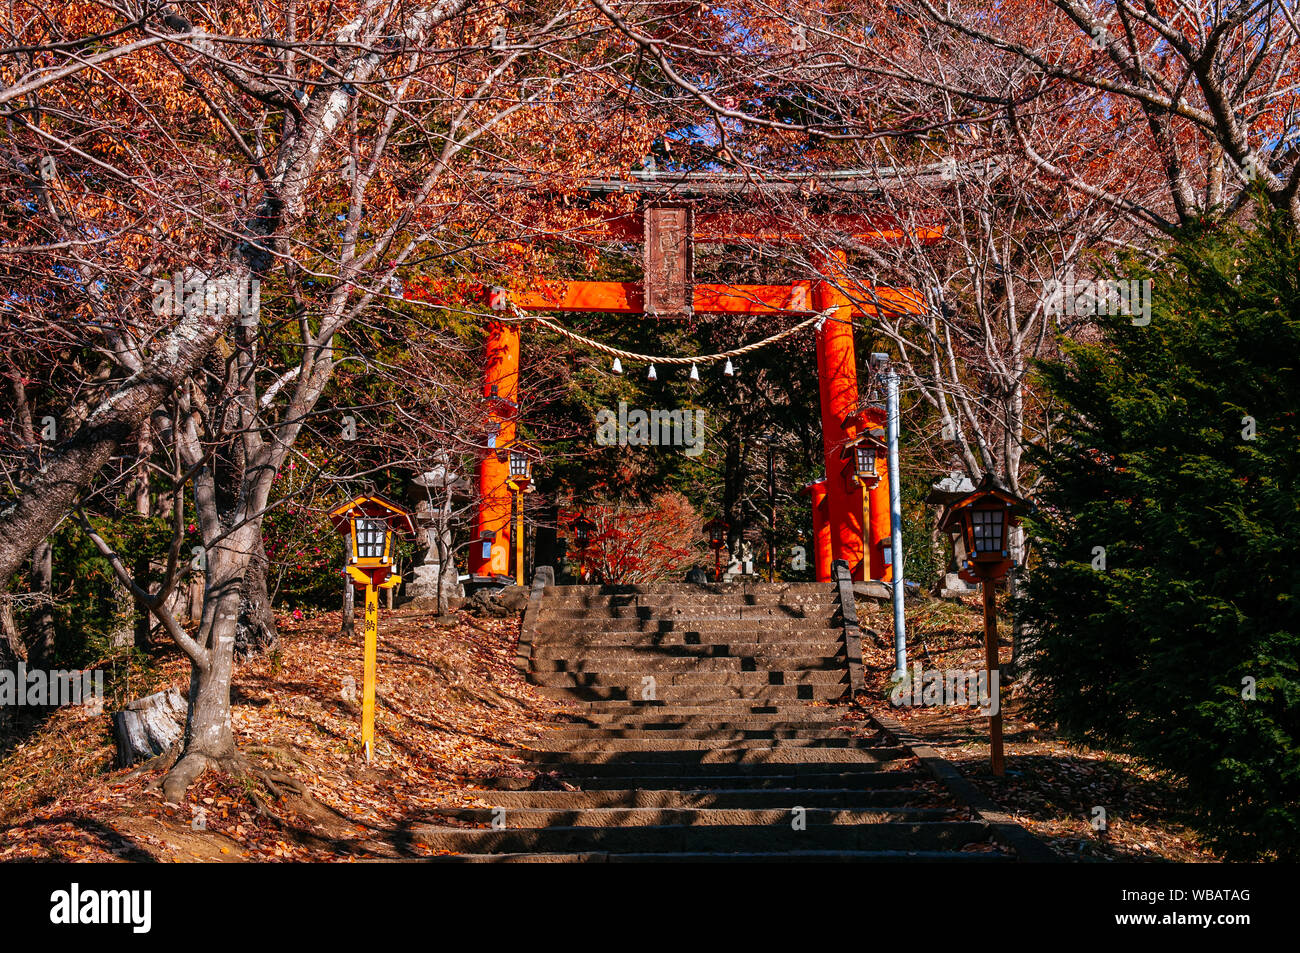 Red Torii gate of Chureito Pagoda Shrine entrance with stone steps under autumn maple tree Shimoyoshida - Arakurayama Sengen Park in Fujiyoshida near Stock Photo